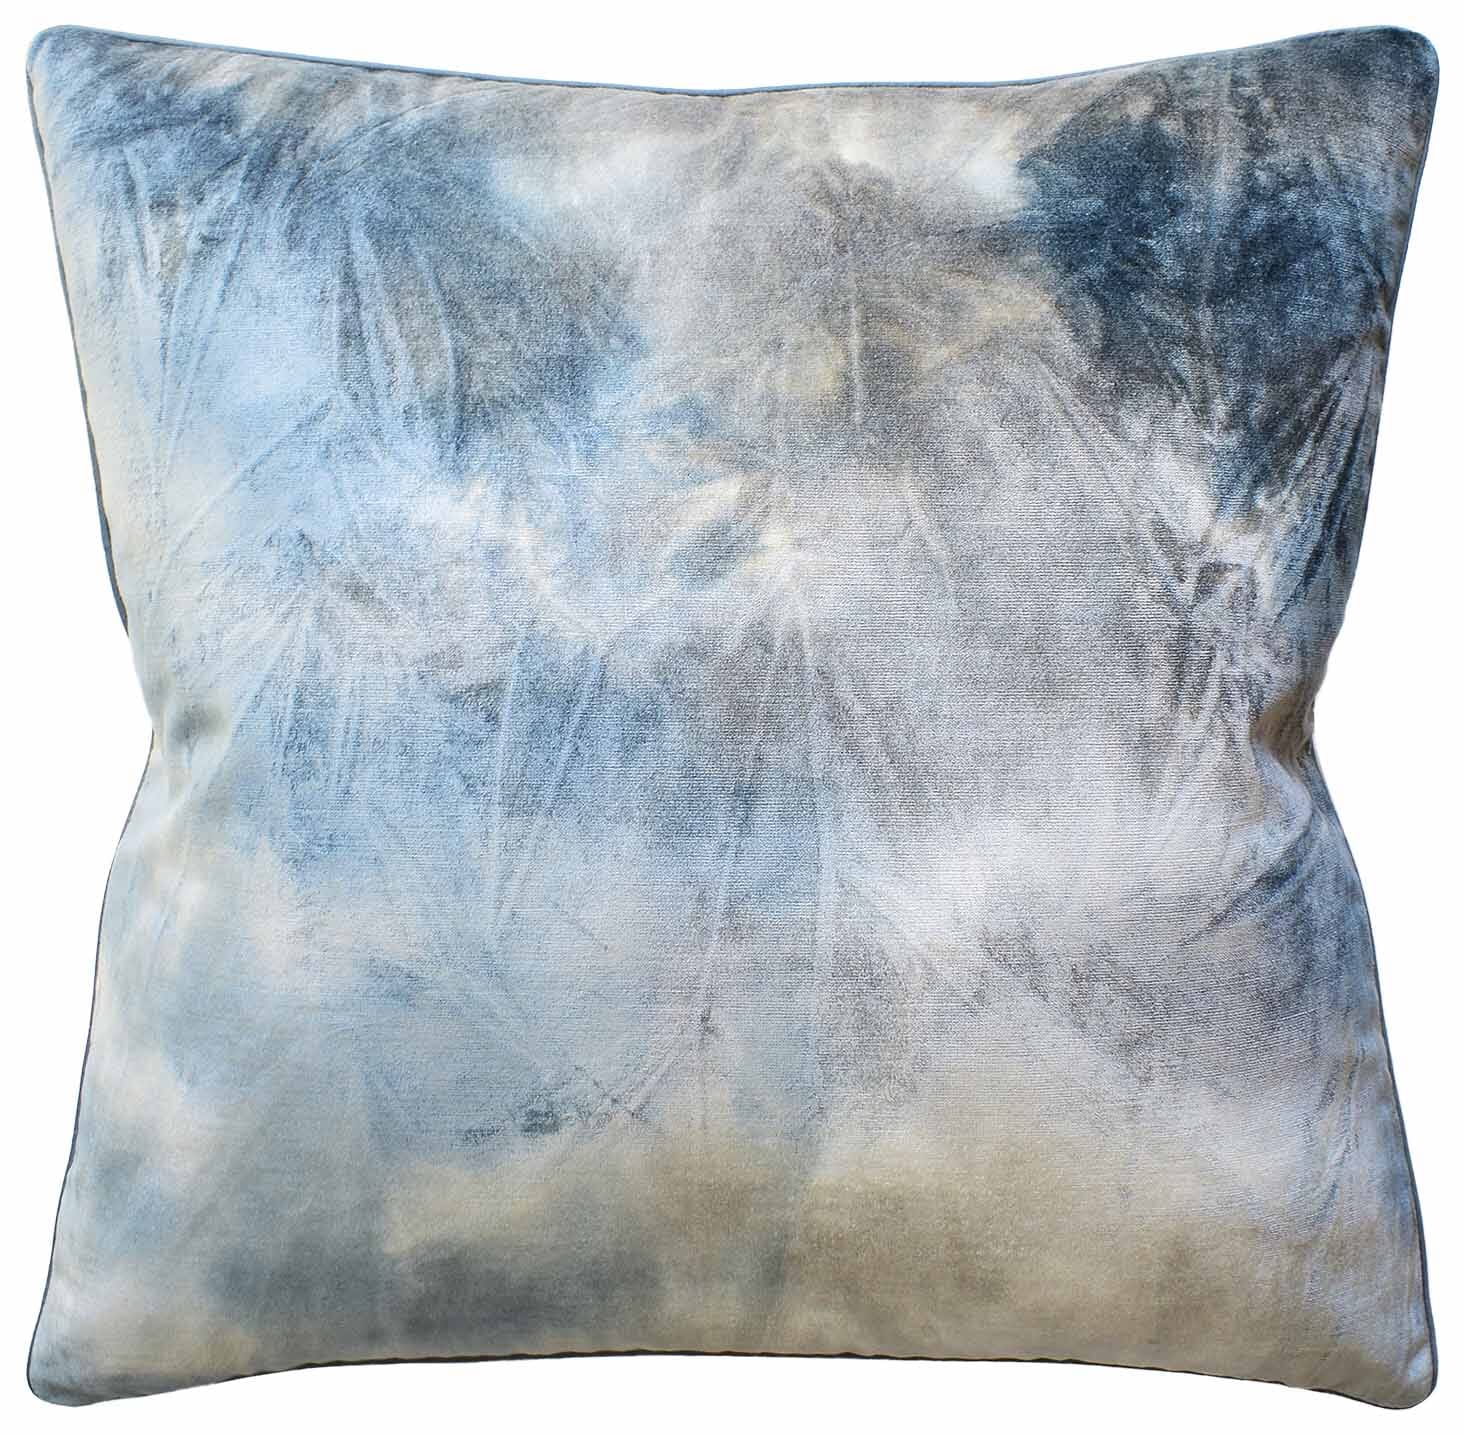 Vibrant Bluemoon - Throw Pillow by Ryan Studio